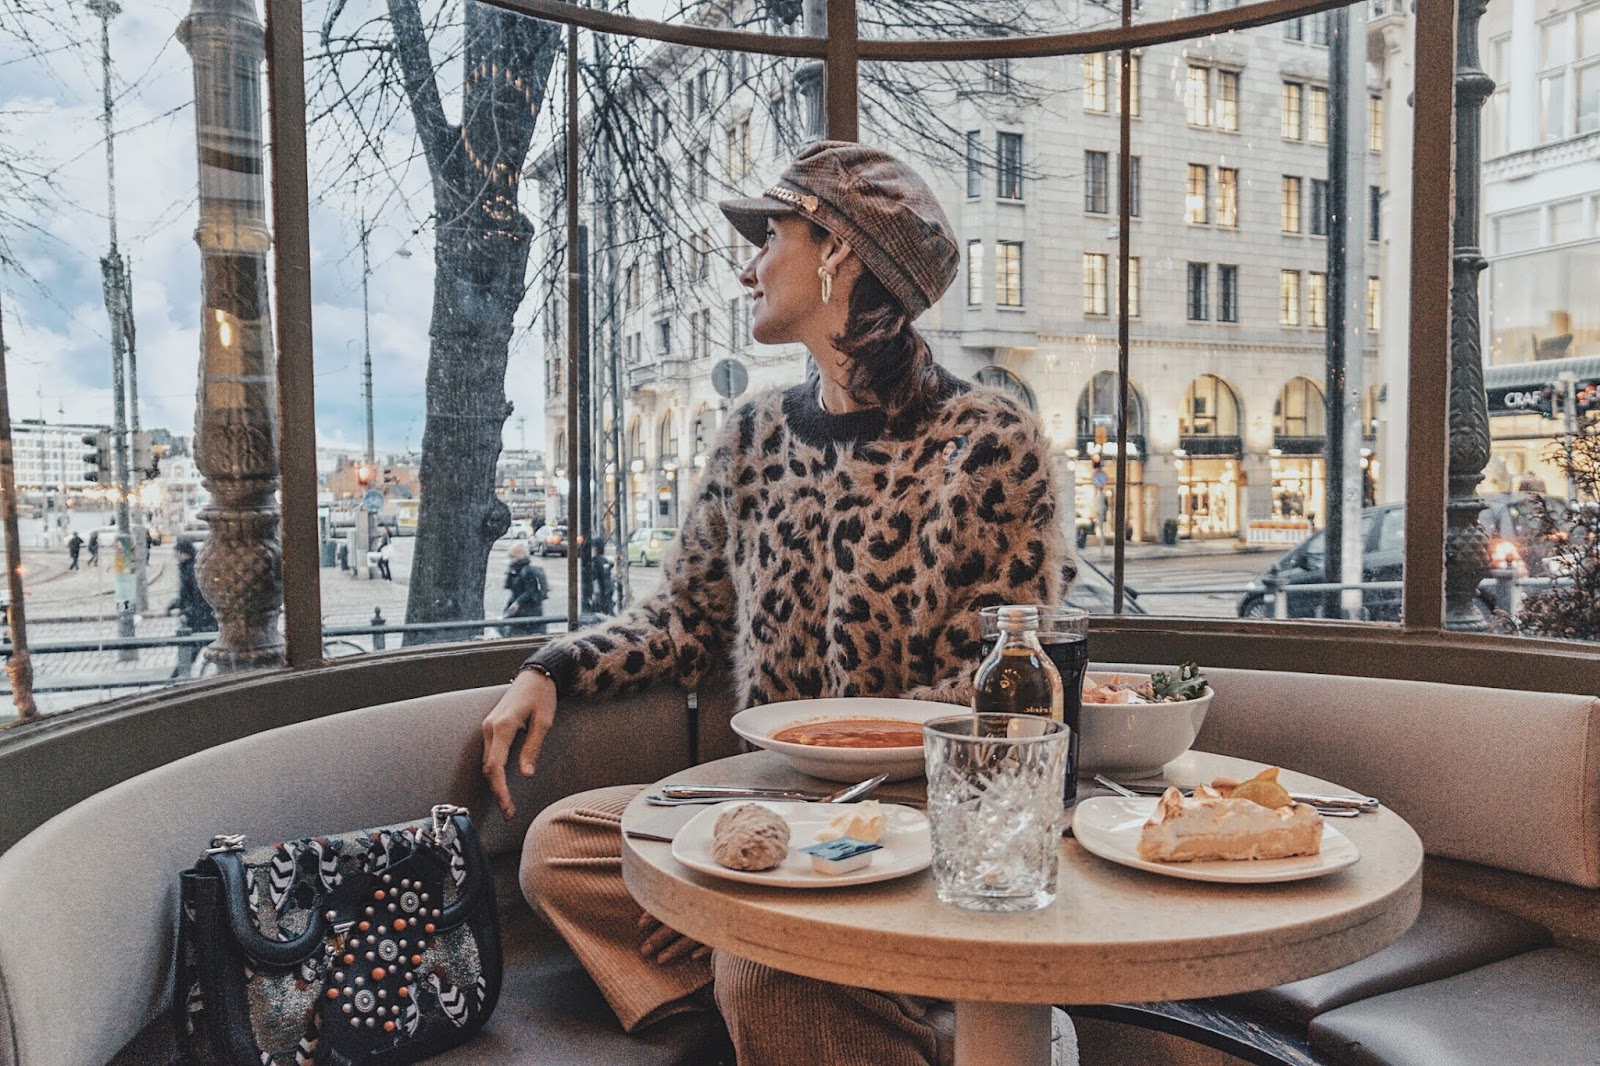 el-blog-de-silvia-rodriguez-lifestyle-travel-finlandia-my-helsinki-pantalones-pana-jersey-leopardo-hm-inuikii-blogger-influencer